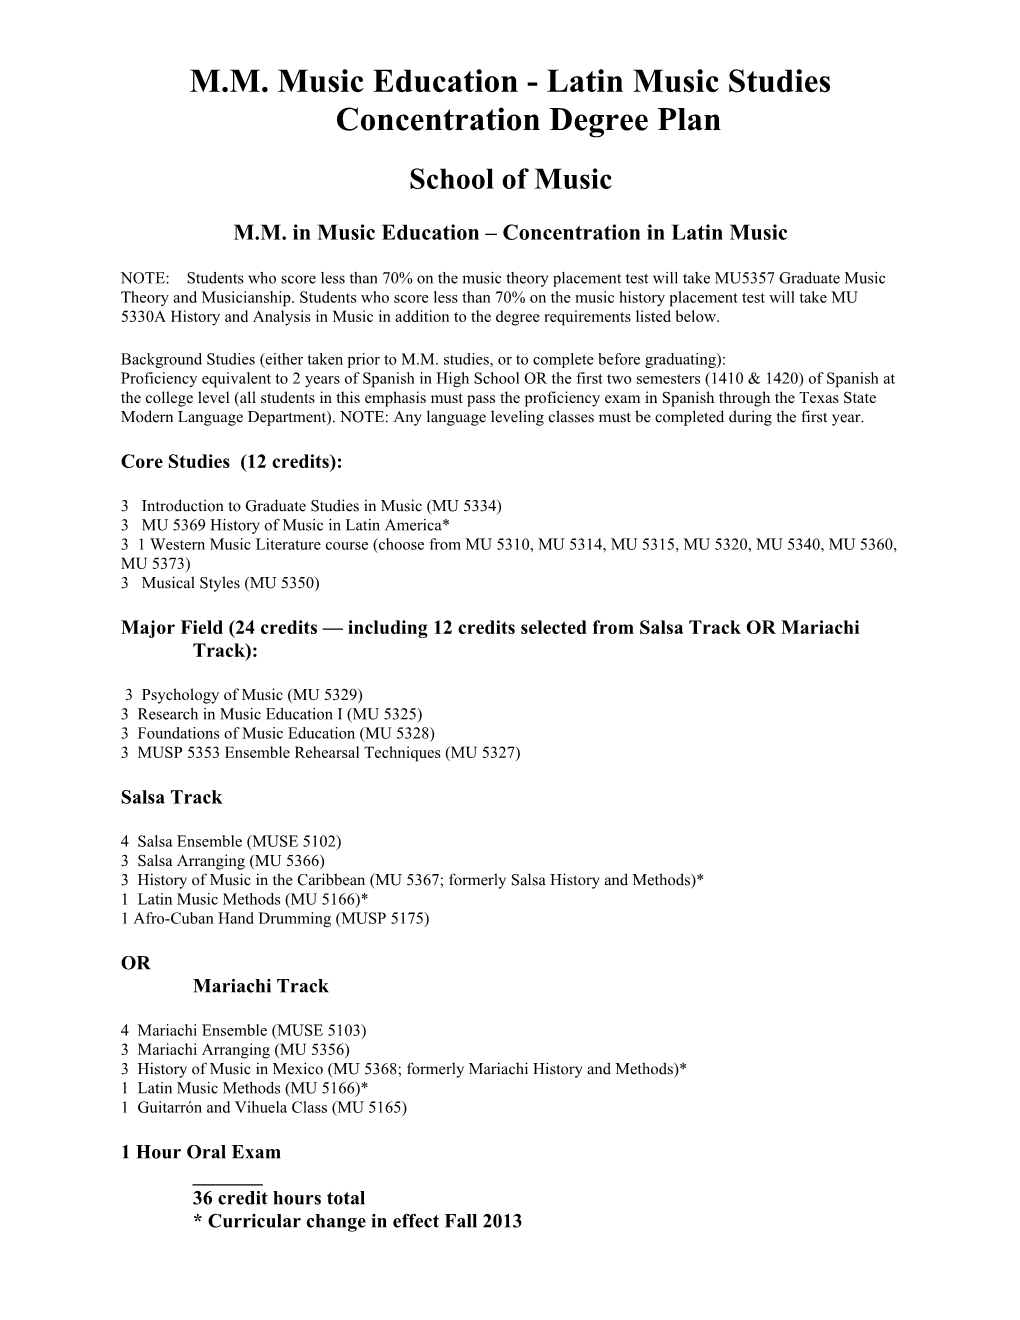 M.M. Music Education - Latin Music Studies Concentration Degree Plan